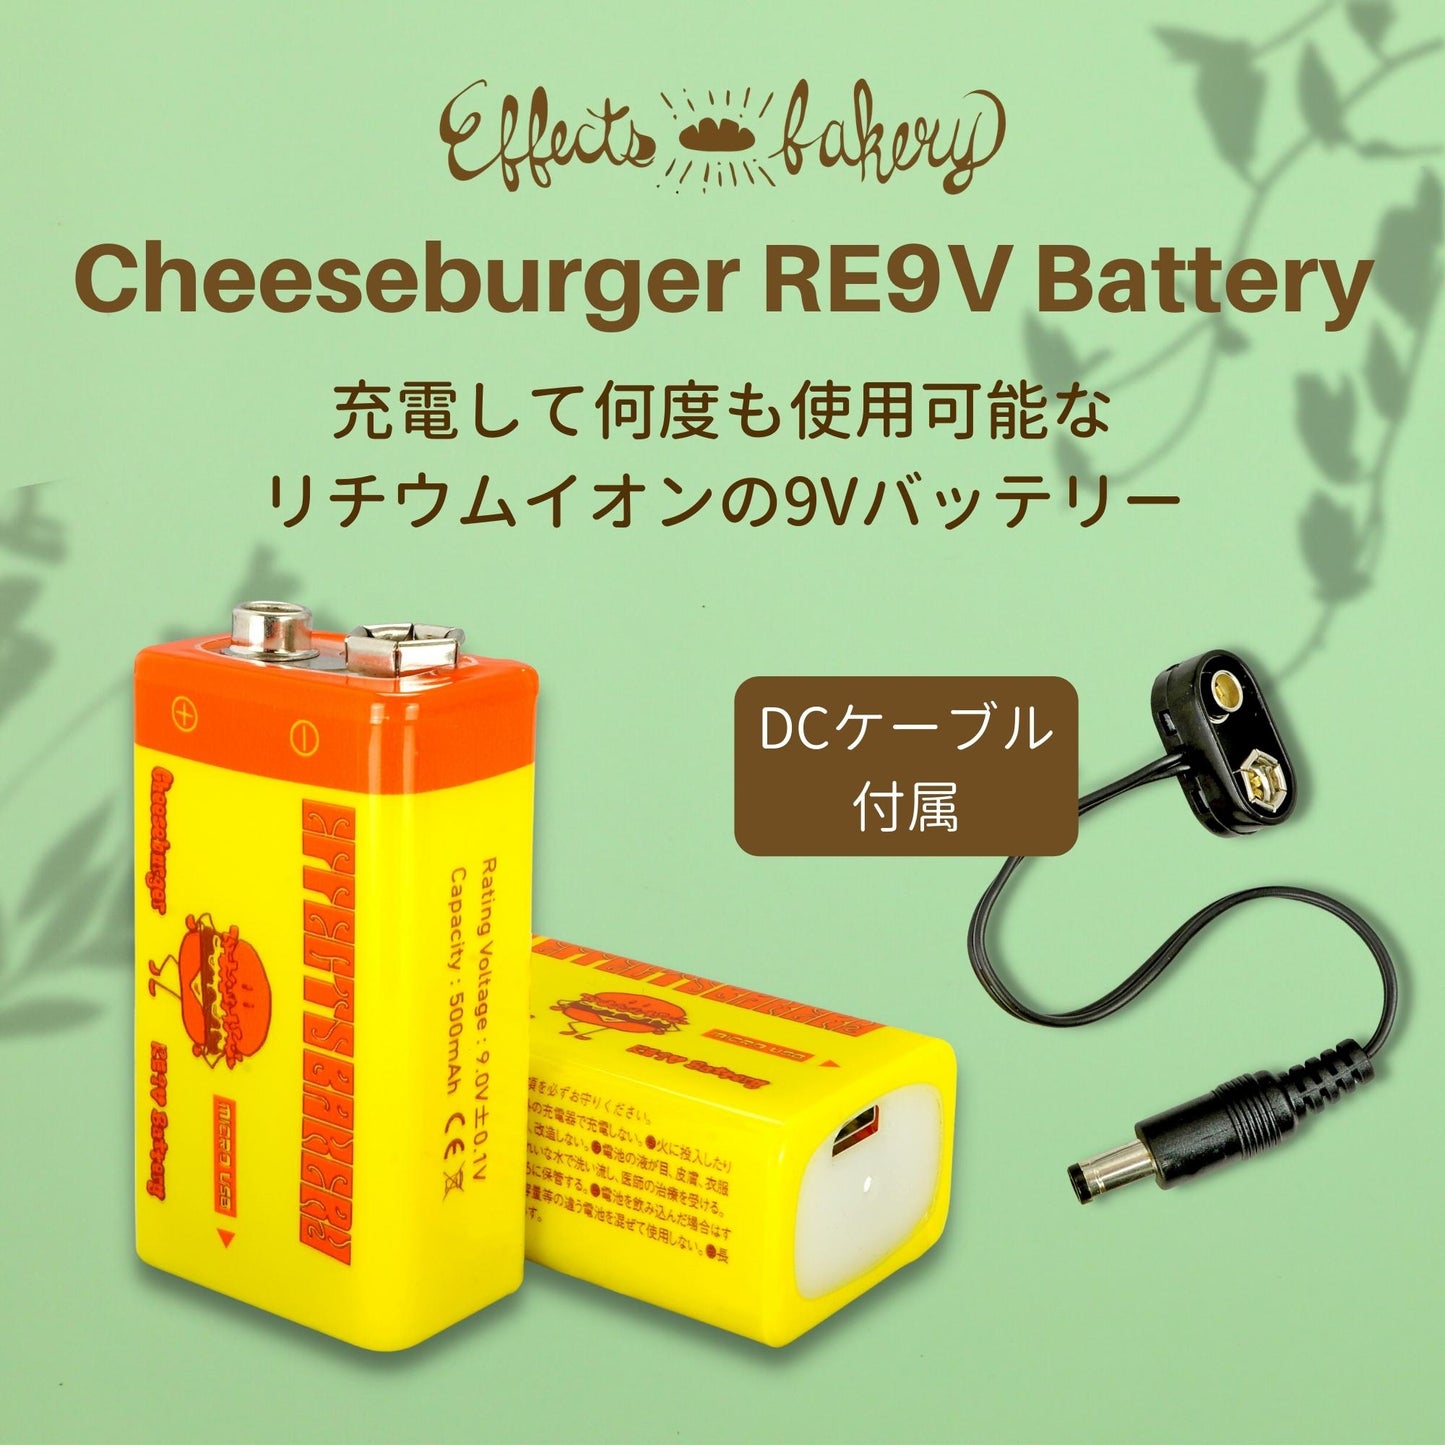 Effects Bakery / Cheeseburger RE9V Battery